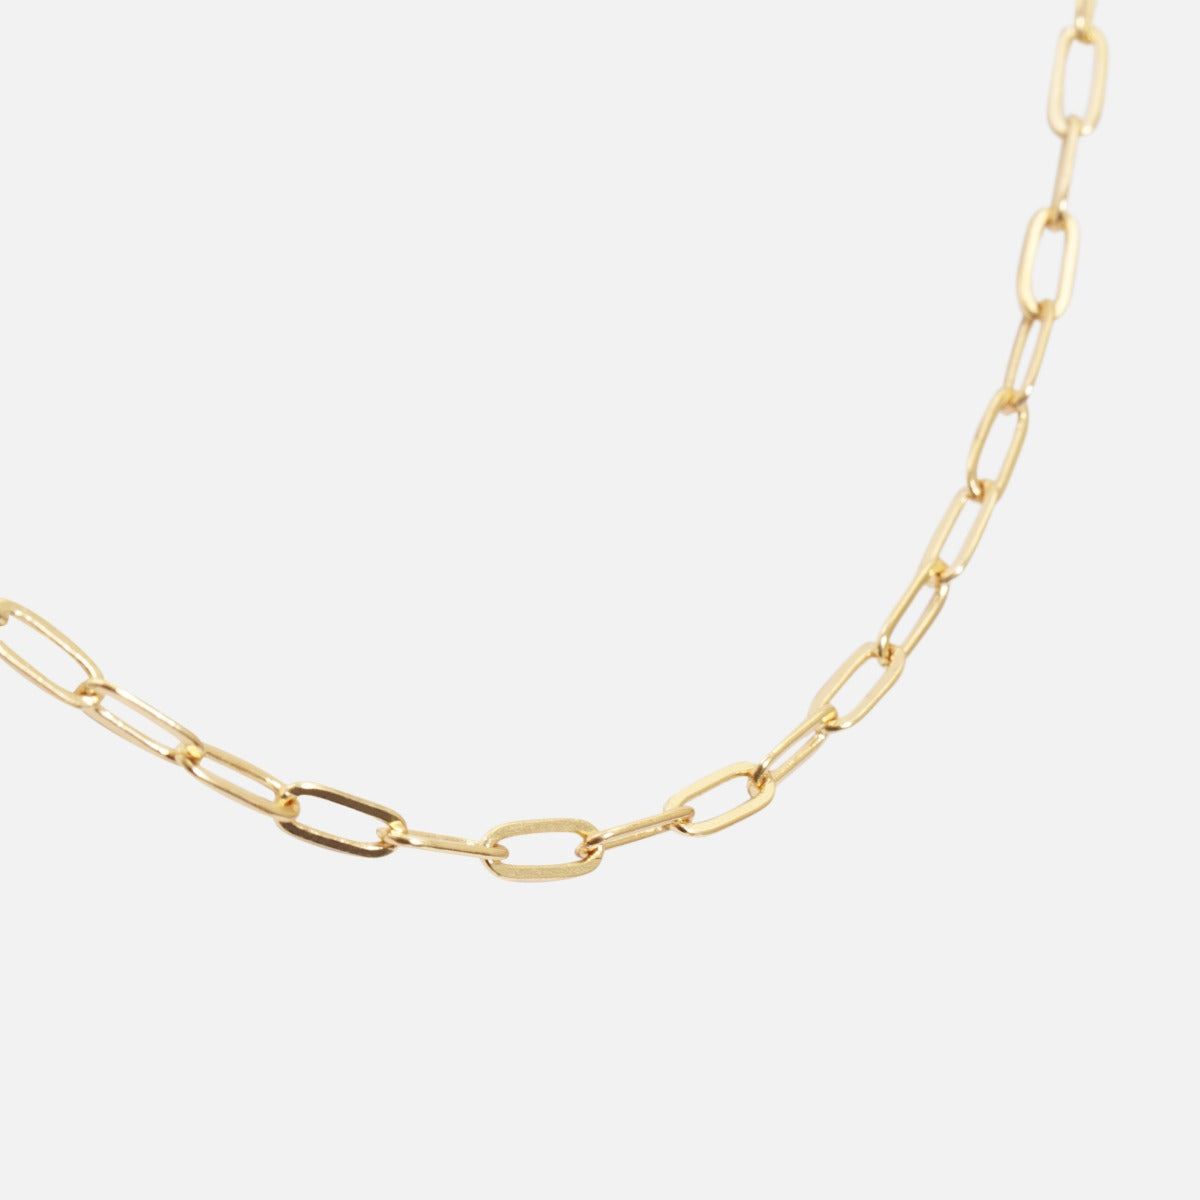 Golden necklace with trombones chain